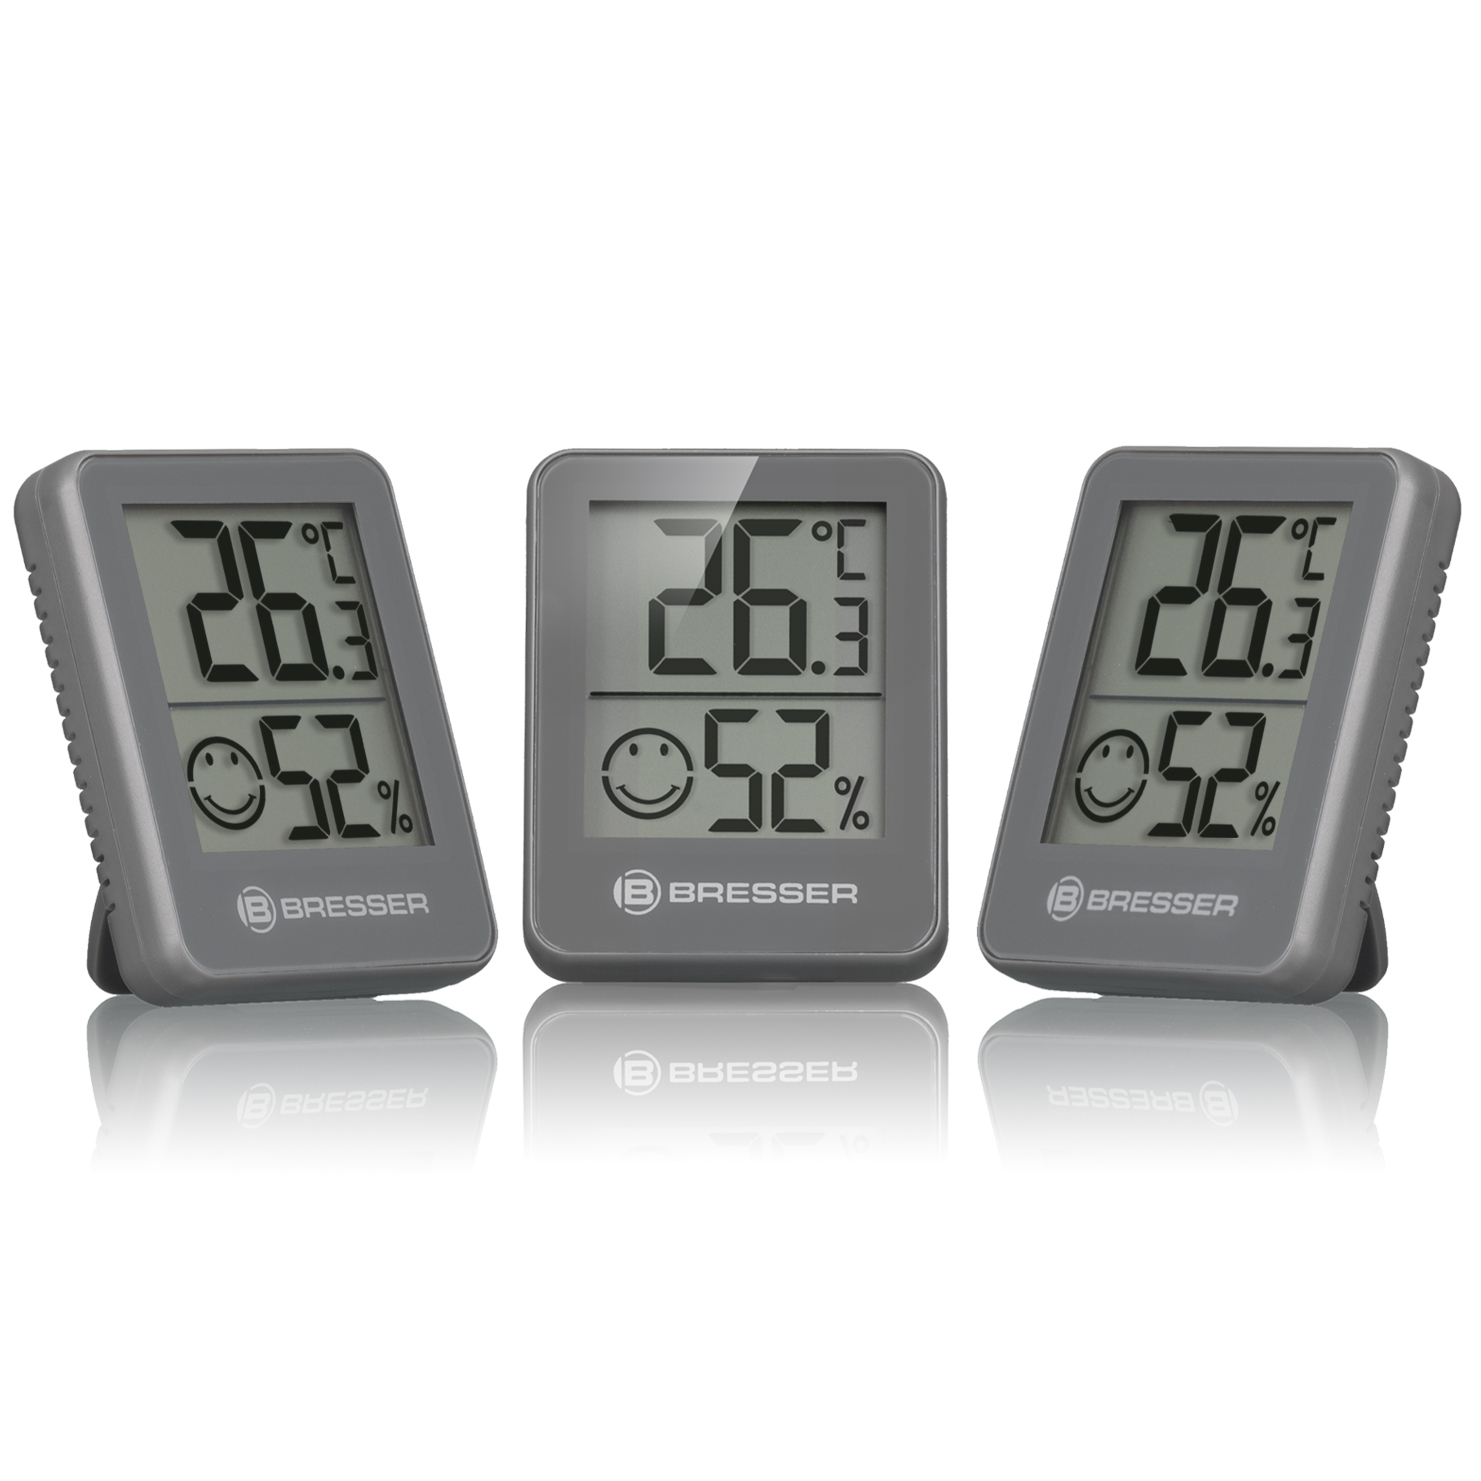 Hygro BRESSER Temeo 6er-Set Wetterstation Indikator Thermo-/Hygrometer